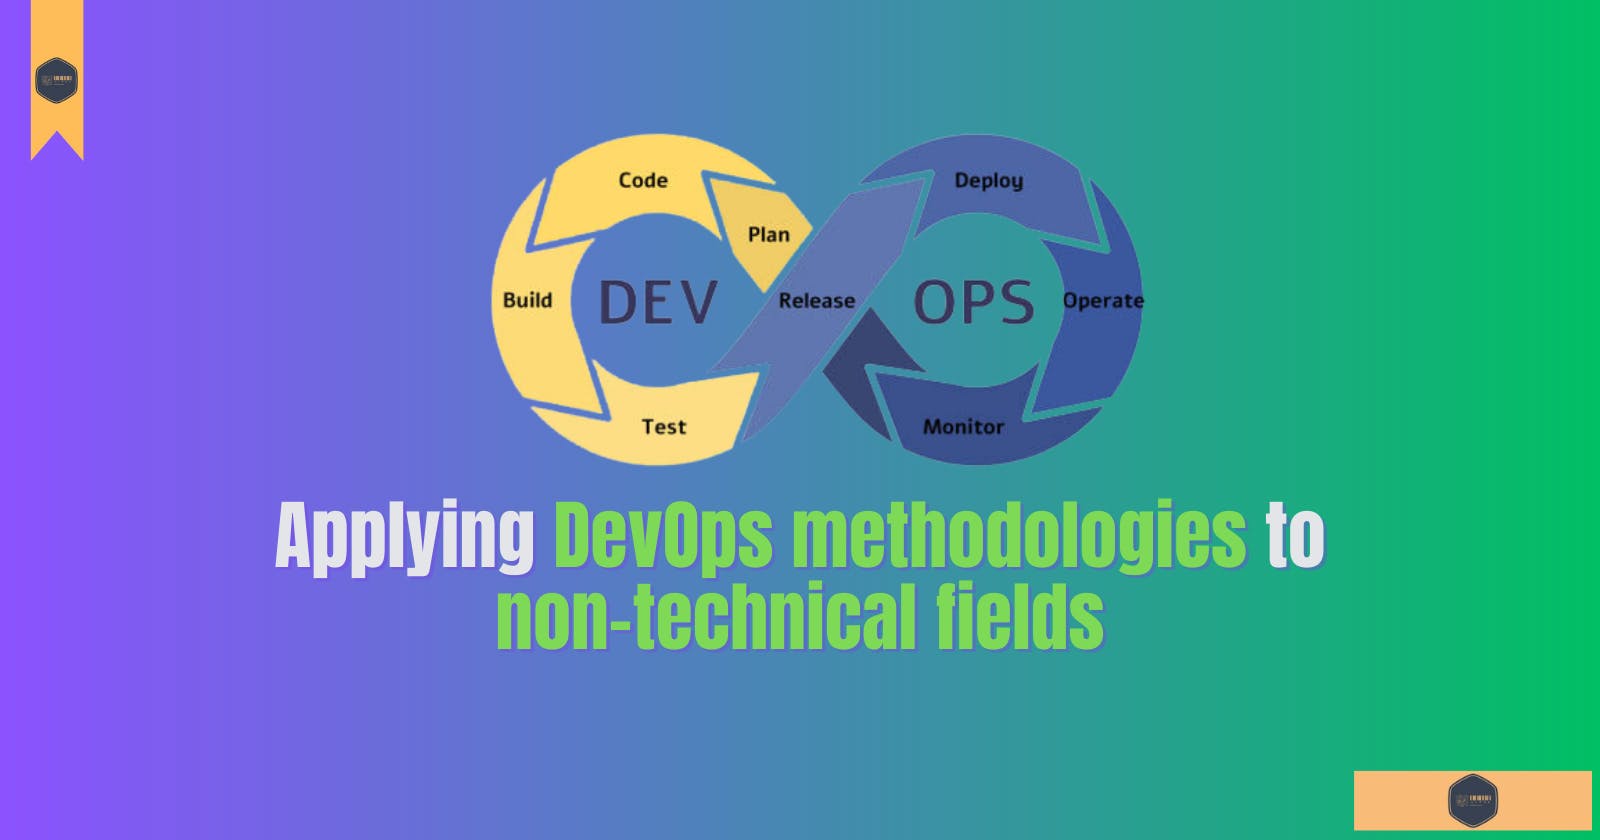 Applying DevOps methodologies to non-technical fields such as marketing or HR